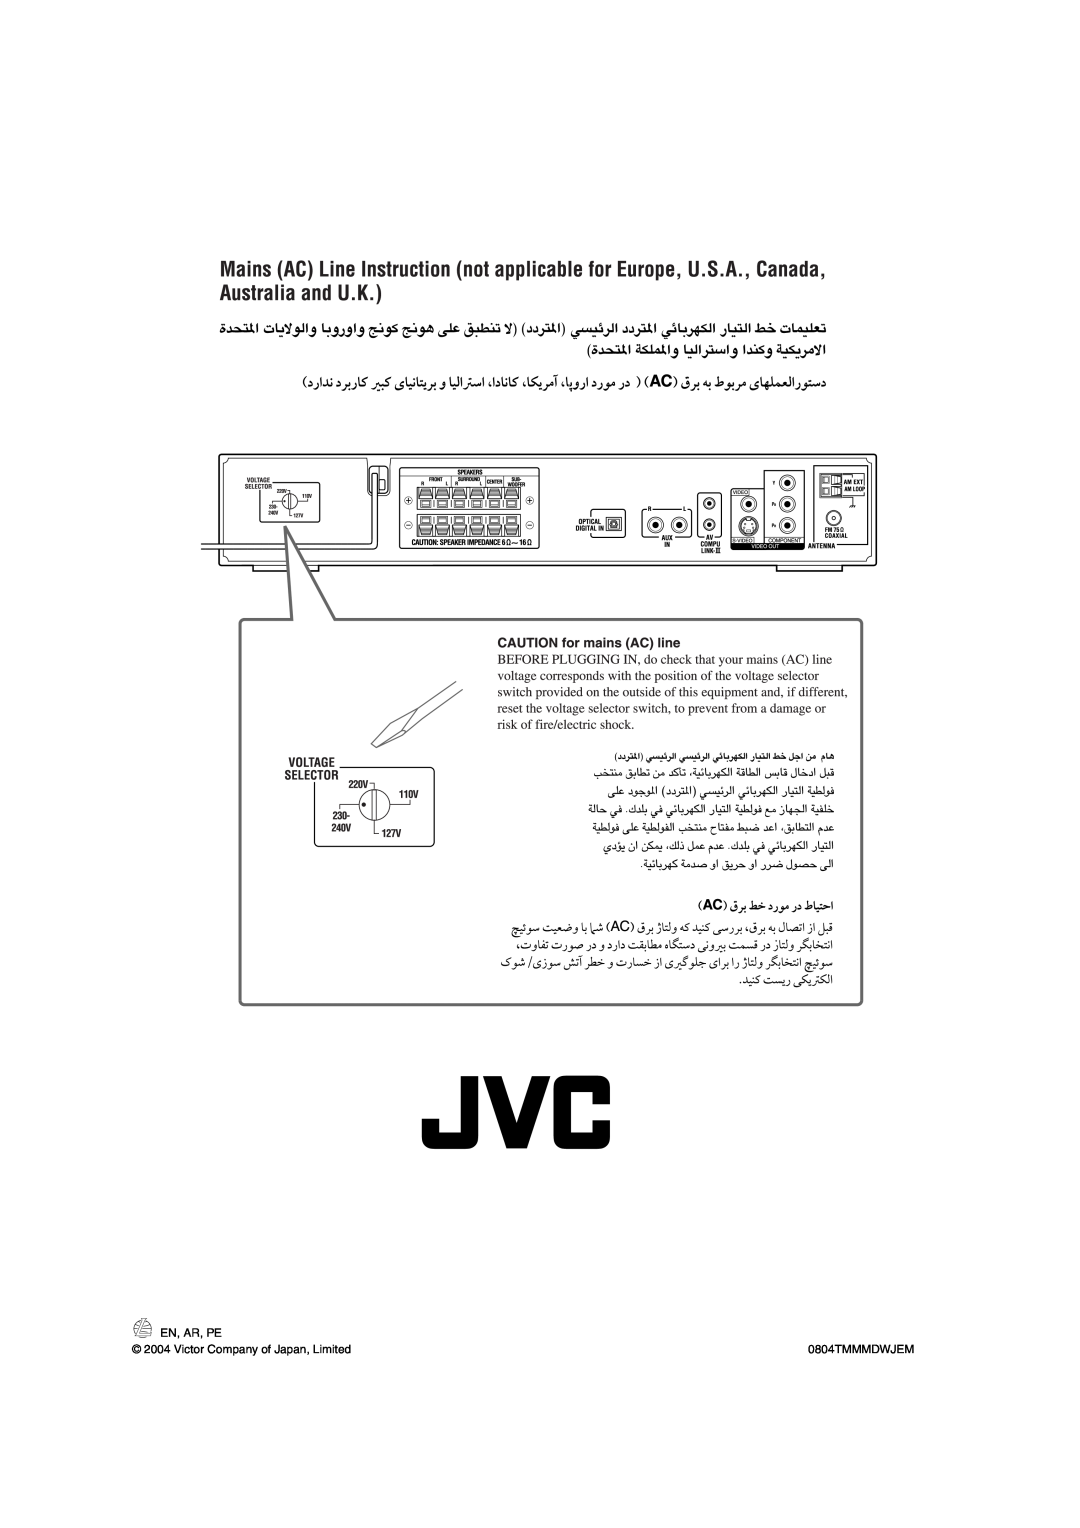 JVC GVT0141-003A manual En, Ar, Pe, Victor Company of Japan, Limited, 0804TMMMDWJEM 